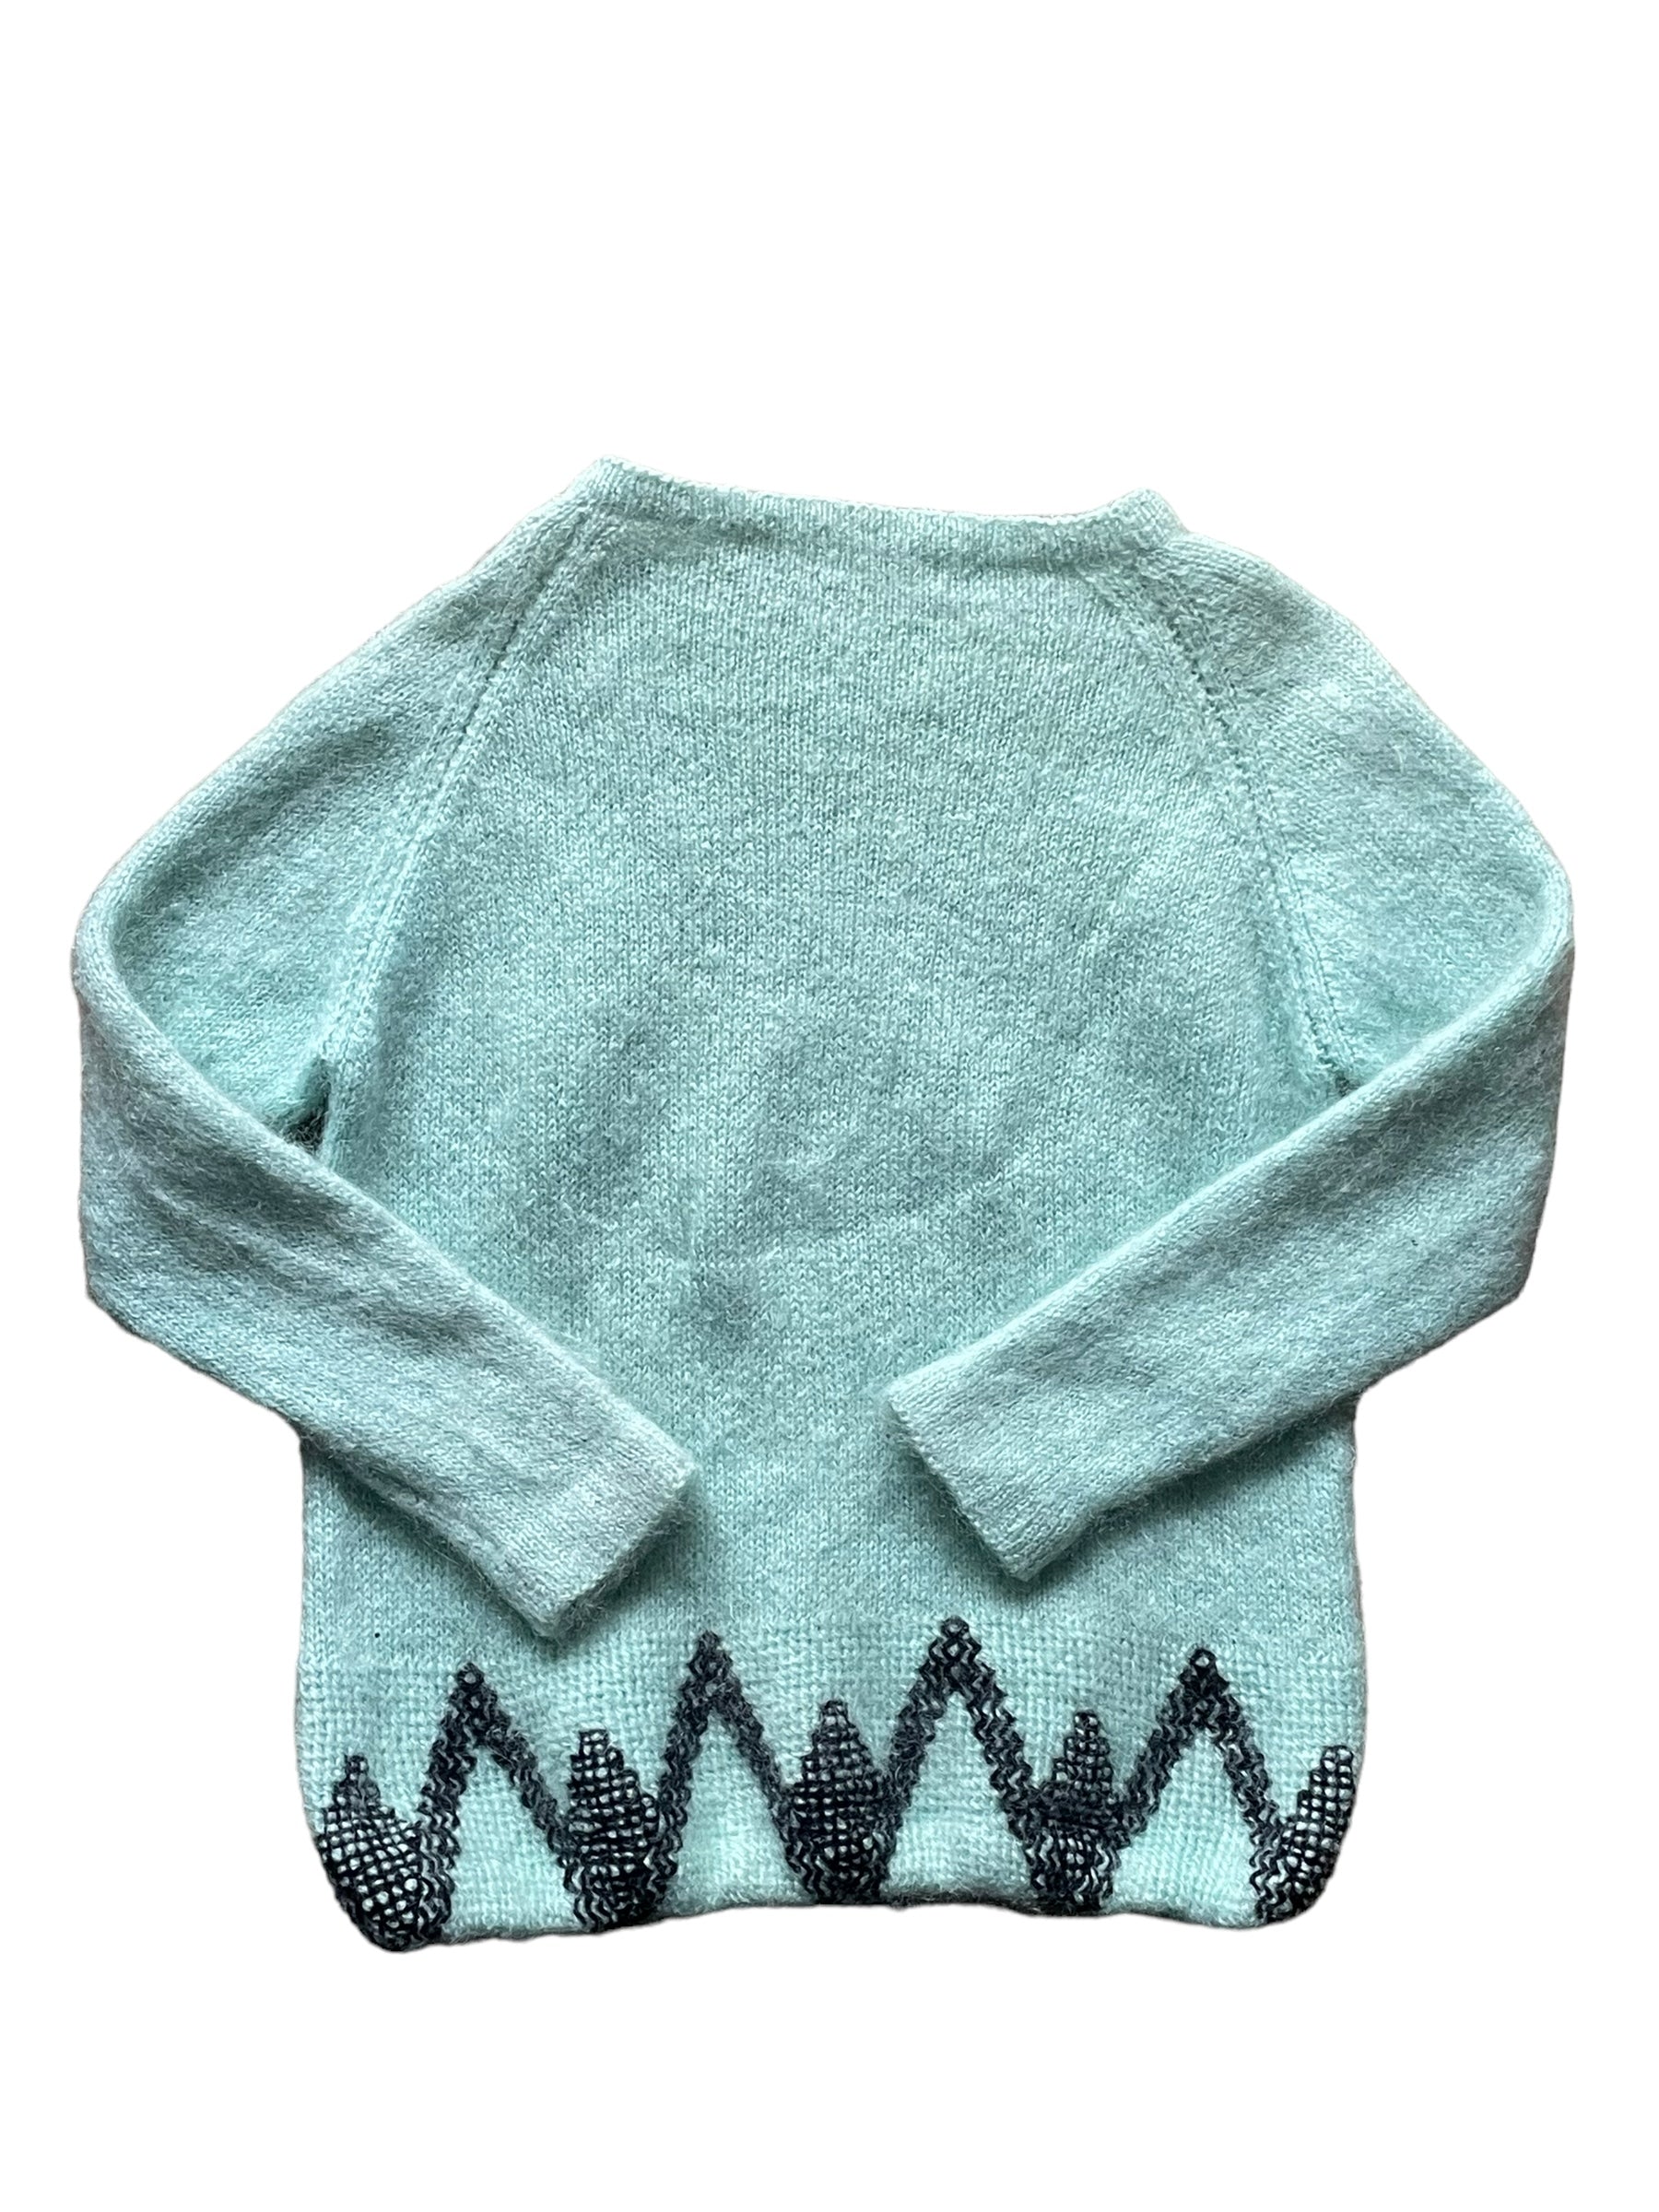 Full back view of Vintage Mint Mohair Sweater SZ L | Seattle Ladies Vintage Sweaters | Barn Owl Vintage